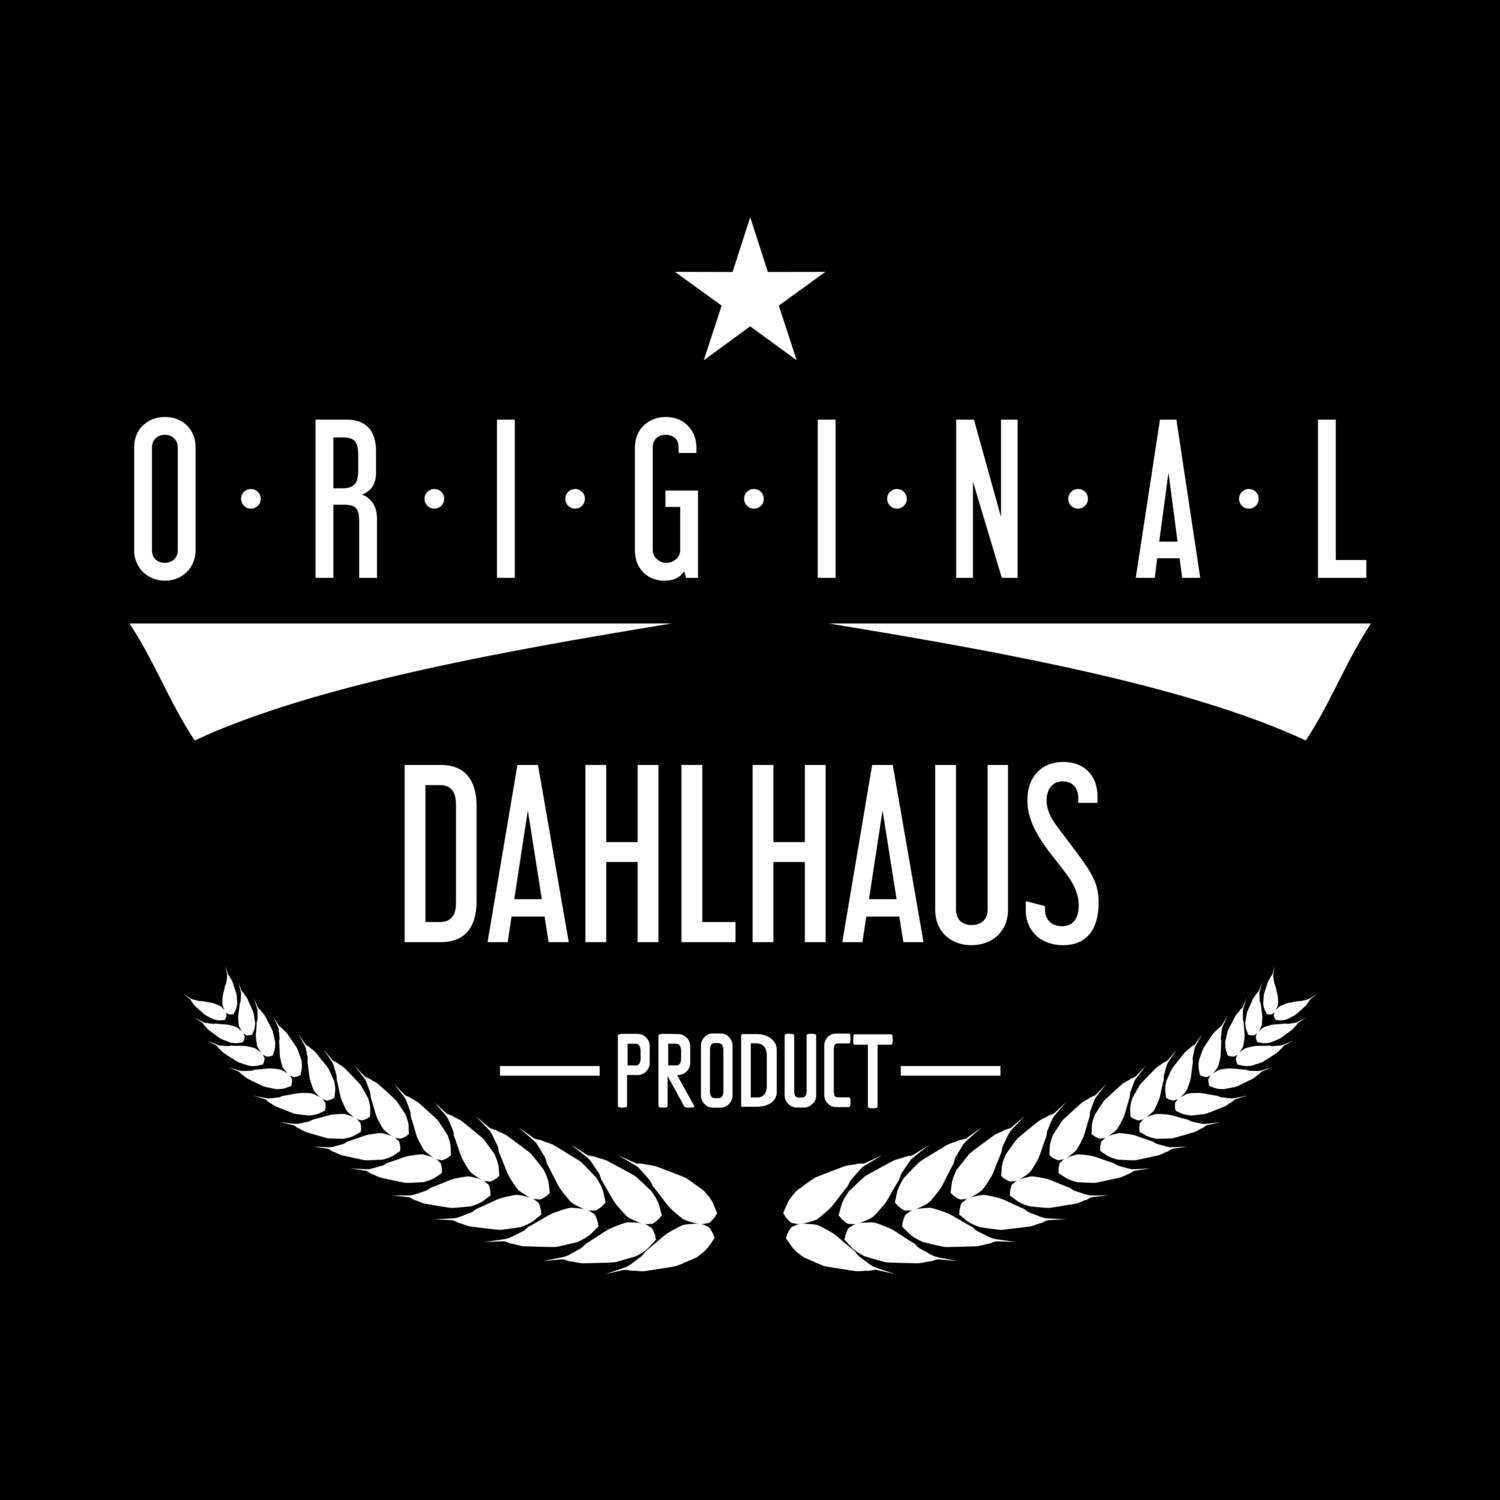 Dahlhaus T-Shirt »Original Product«